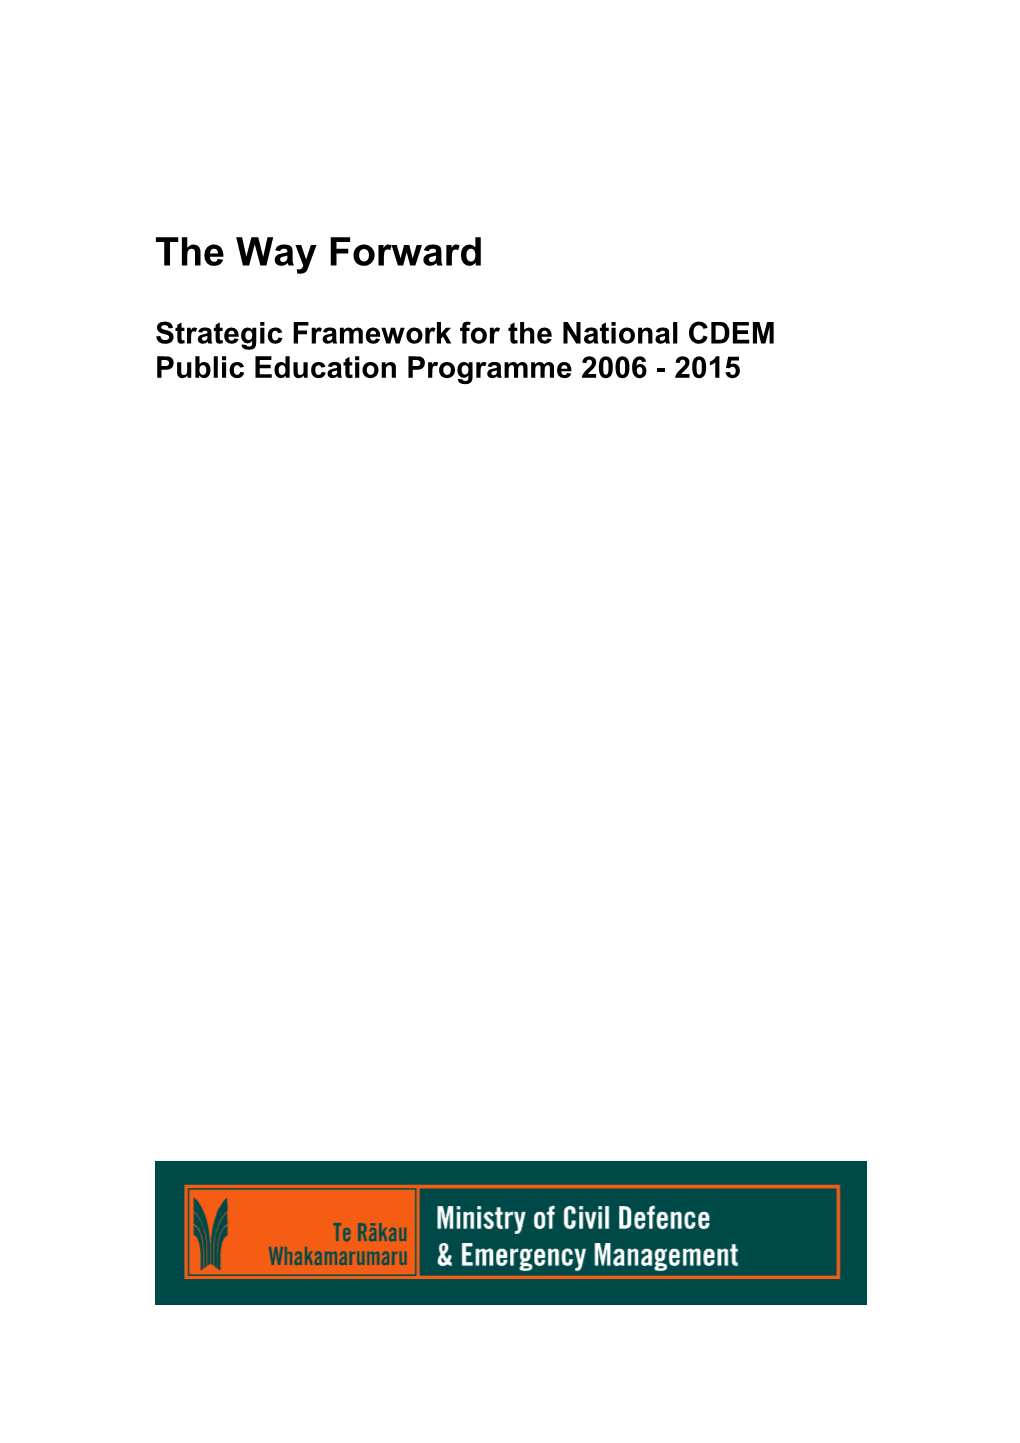 Strategic Framework for the National CDEM Public Education Programme2006 - 2015